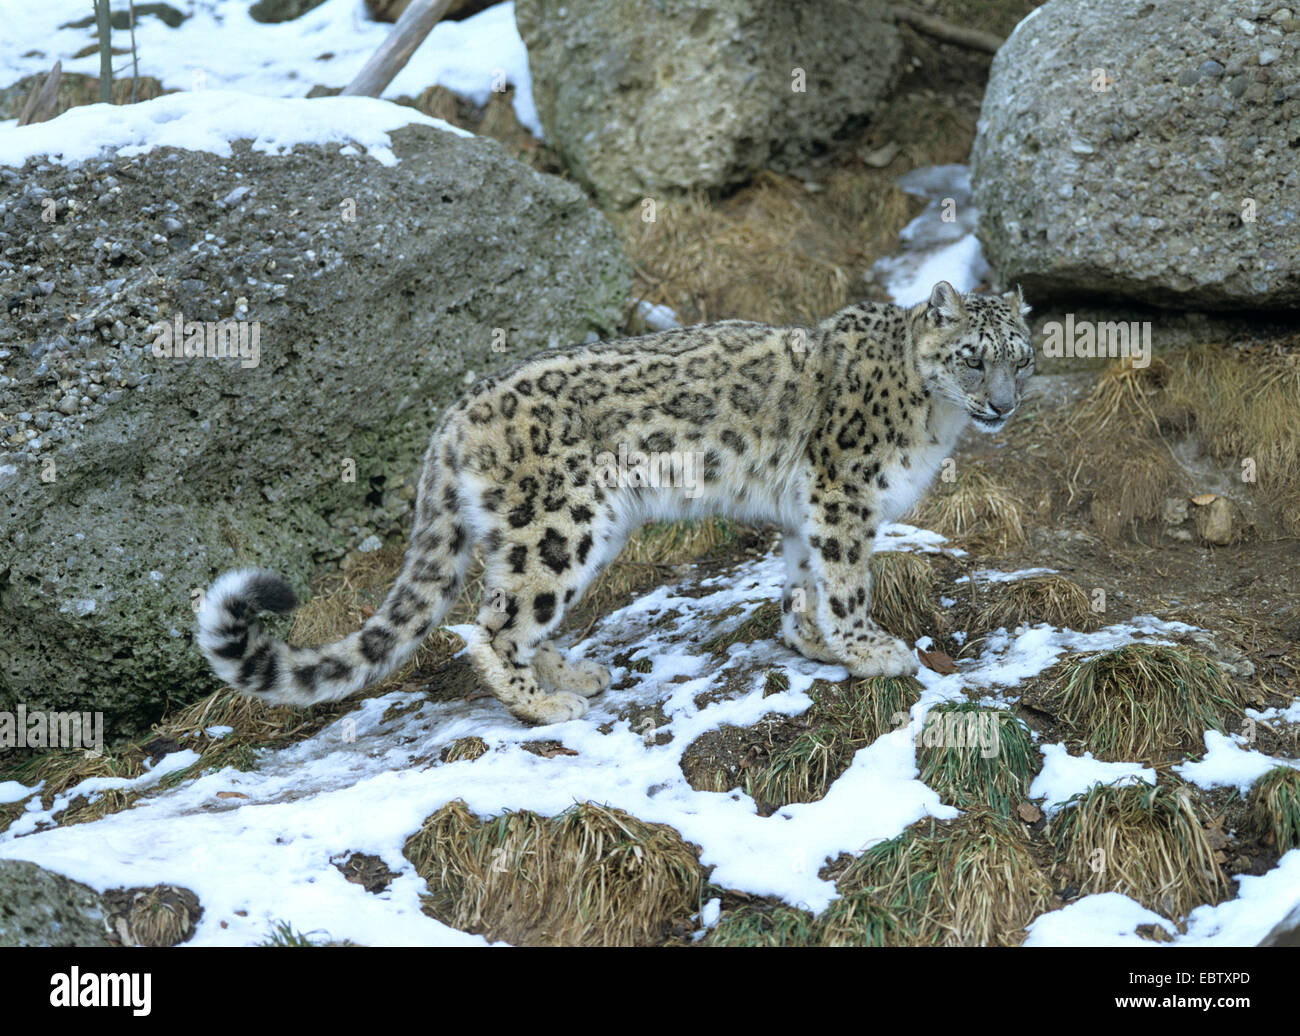 snow leopard (Uncia uncia, Panthera uncia), between rocks Stock Photo